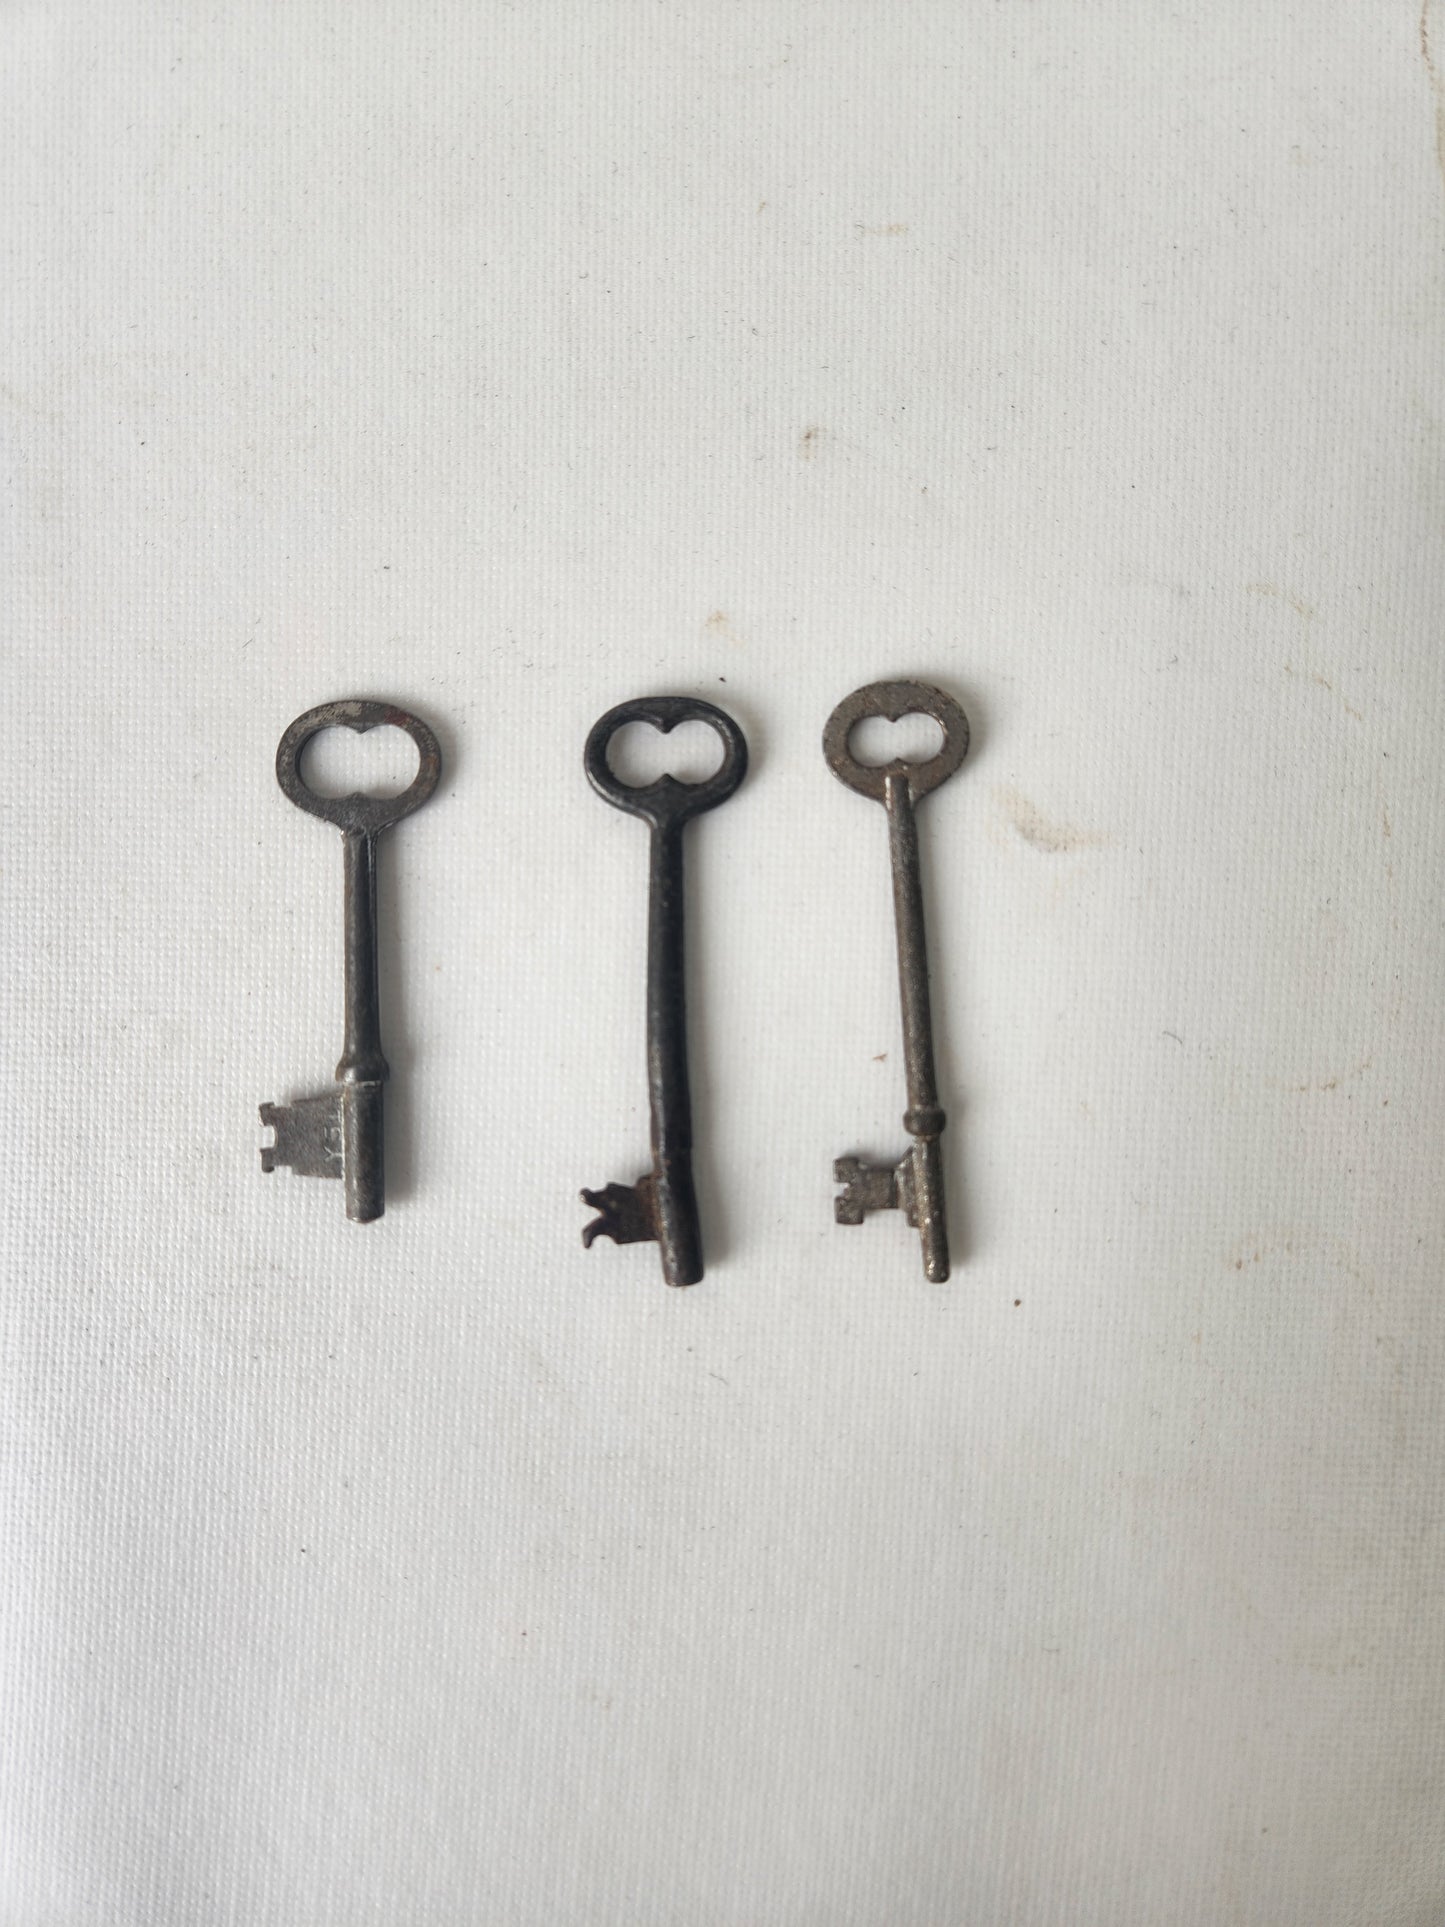 Three Antique Door Skeleton Keys, Vintage Silver Door Keys 102605